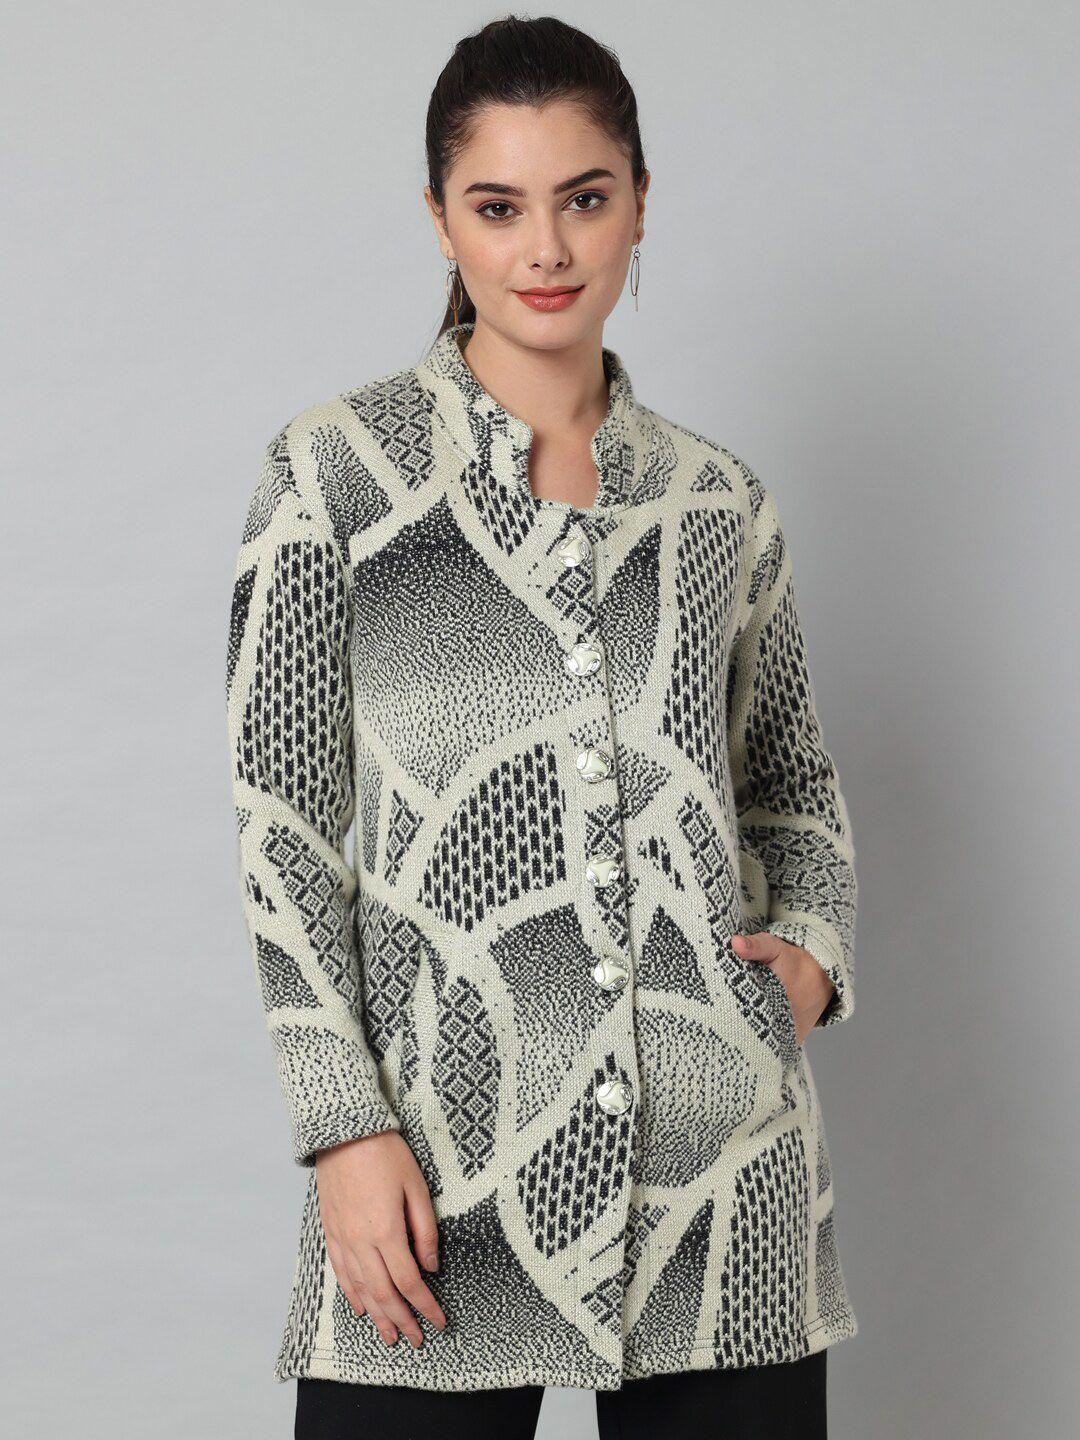 ewools cable knit mandarin collar acrylic wool longline cardigan sweater